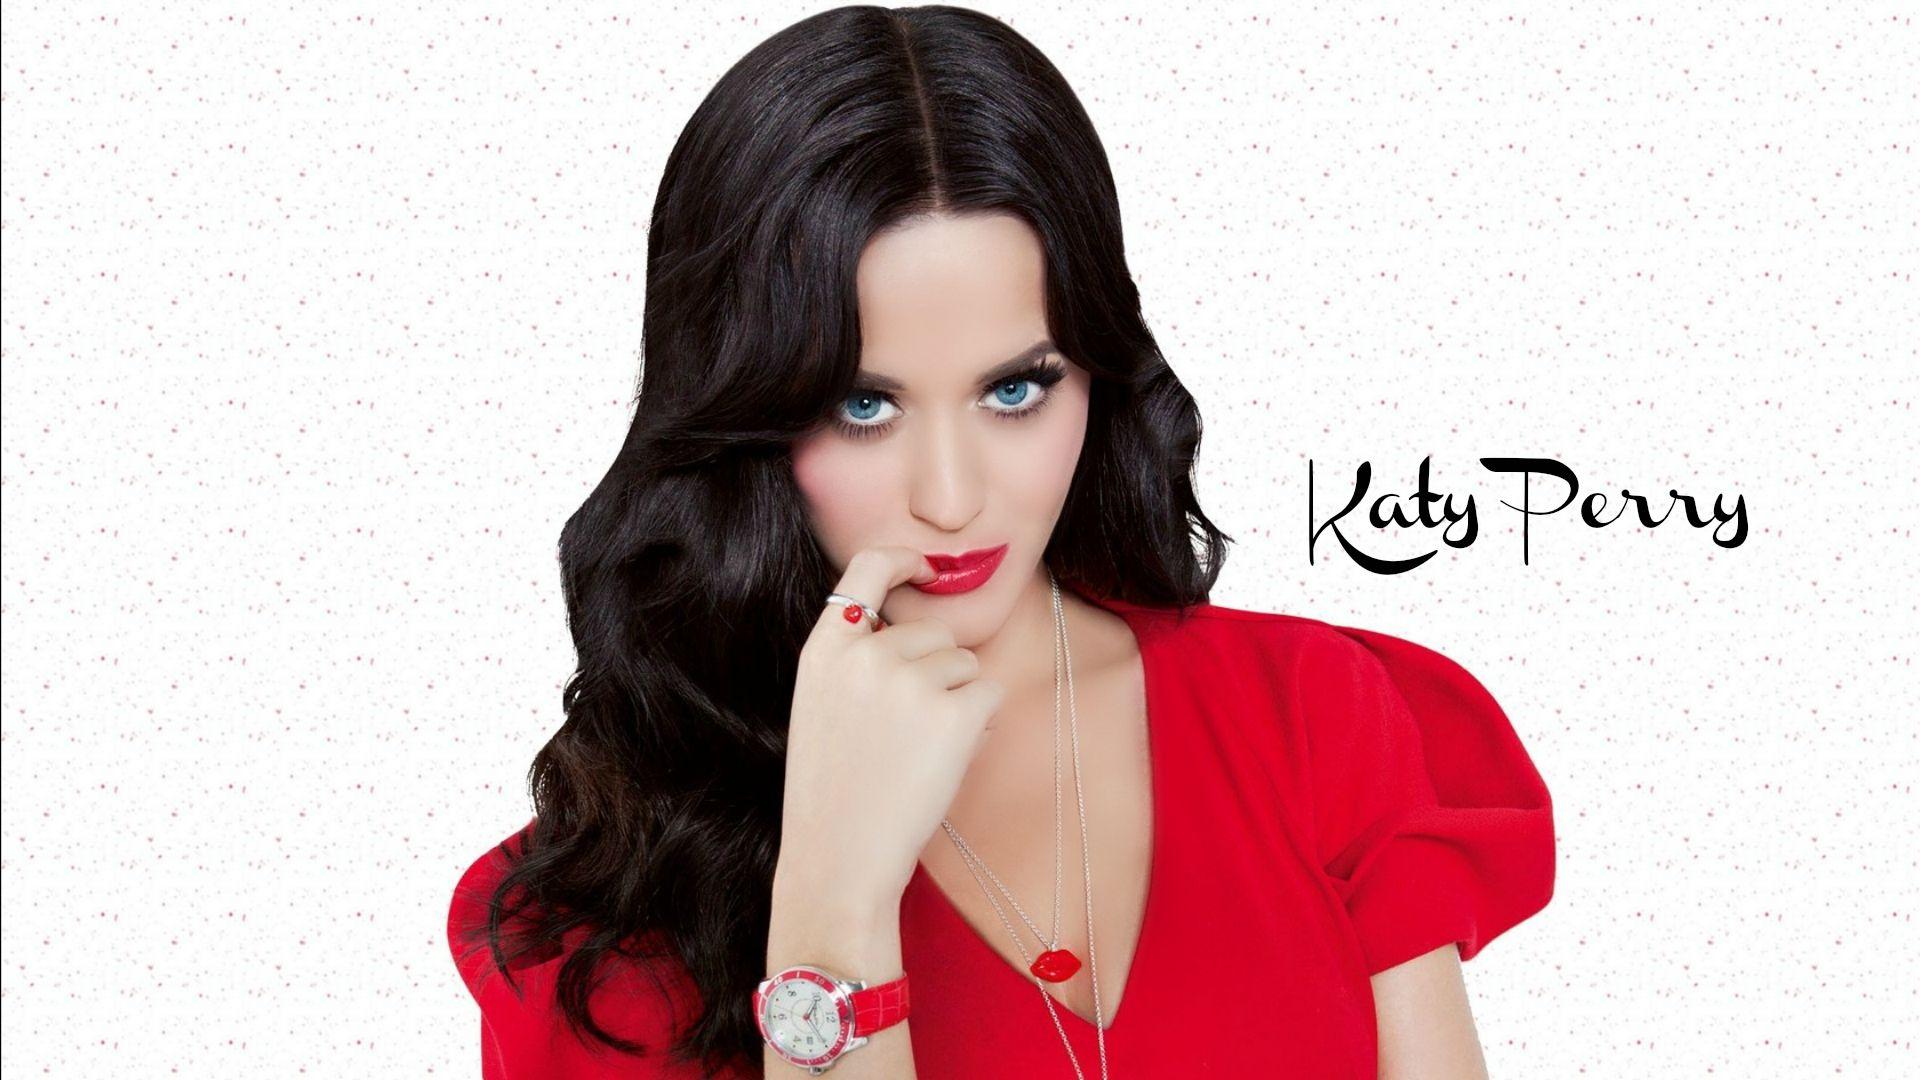 Katy Perry Wallpaper Download FREE. MrPopat